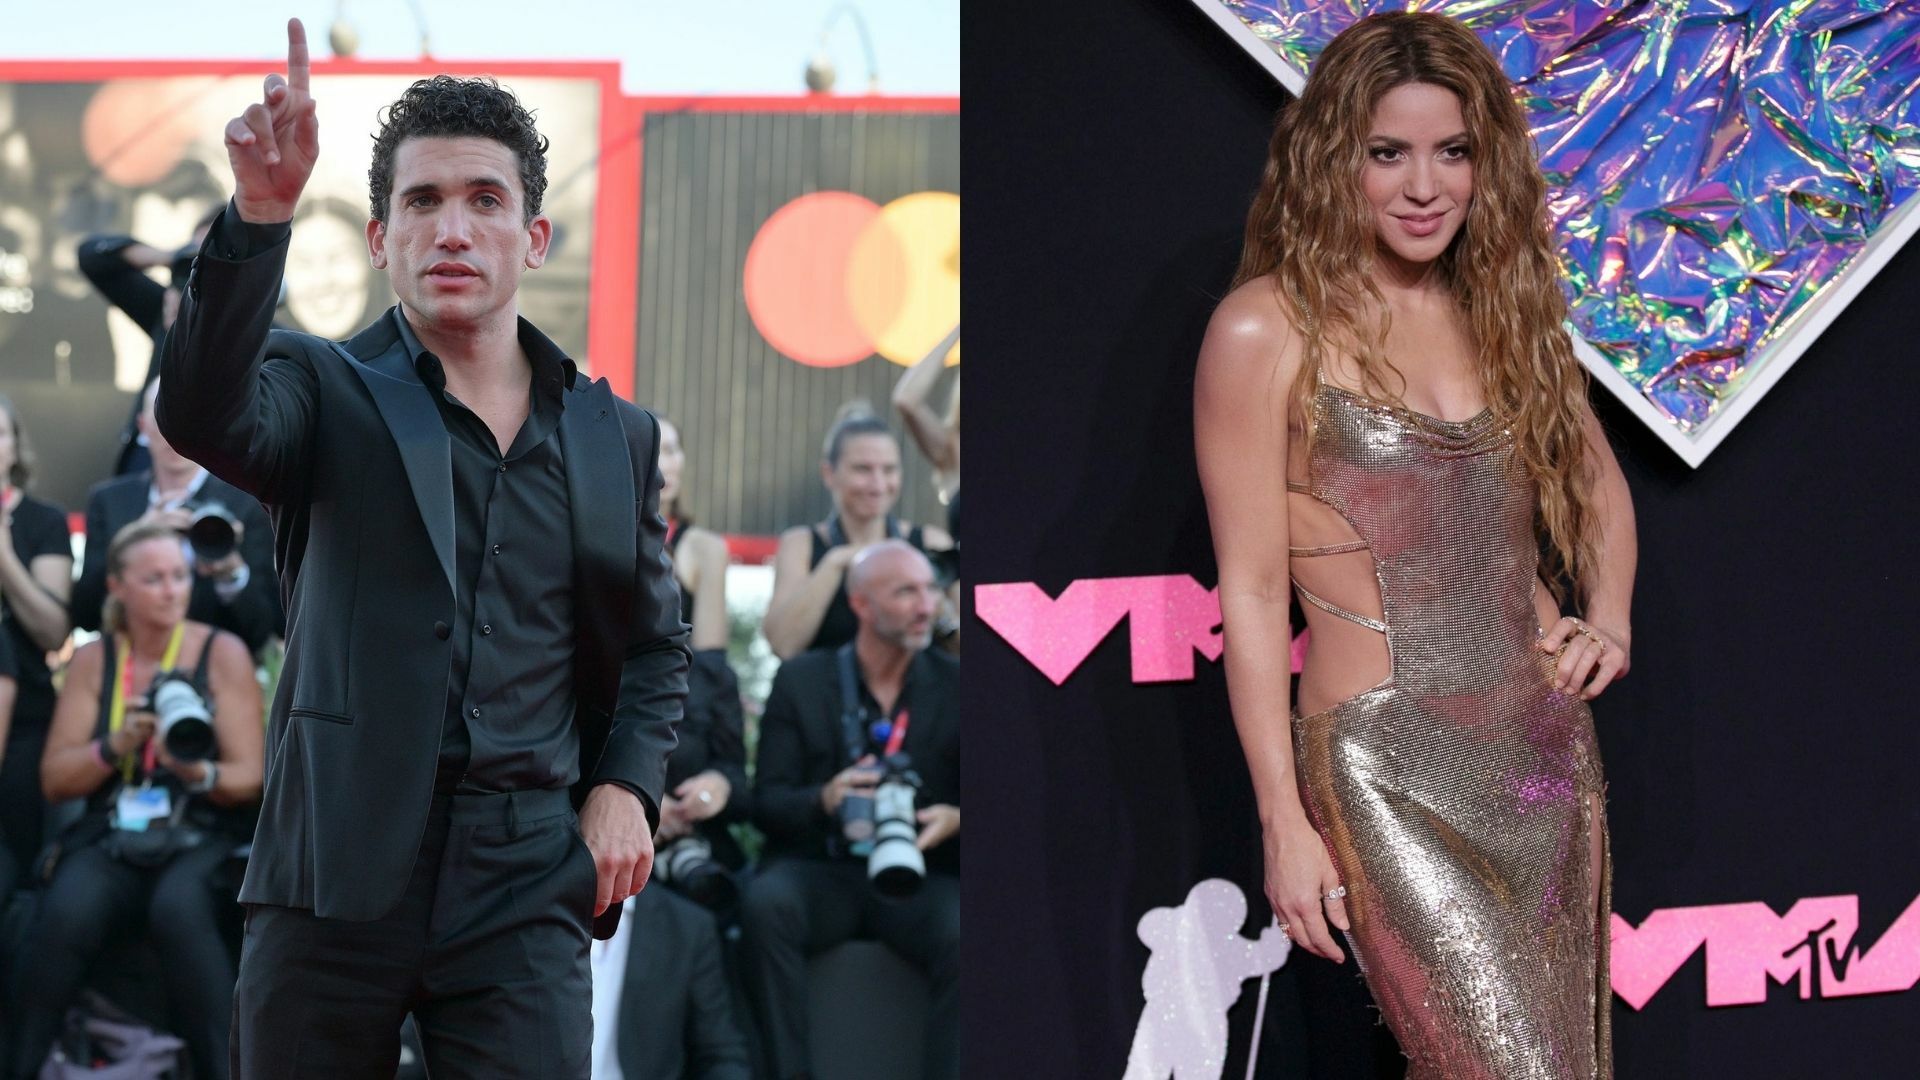 Jaime Lorente, Denver de La Casa de Papel, arremete contra Shakira